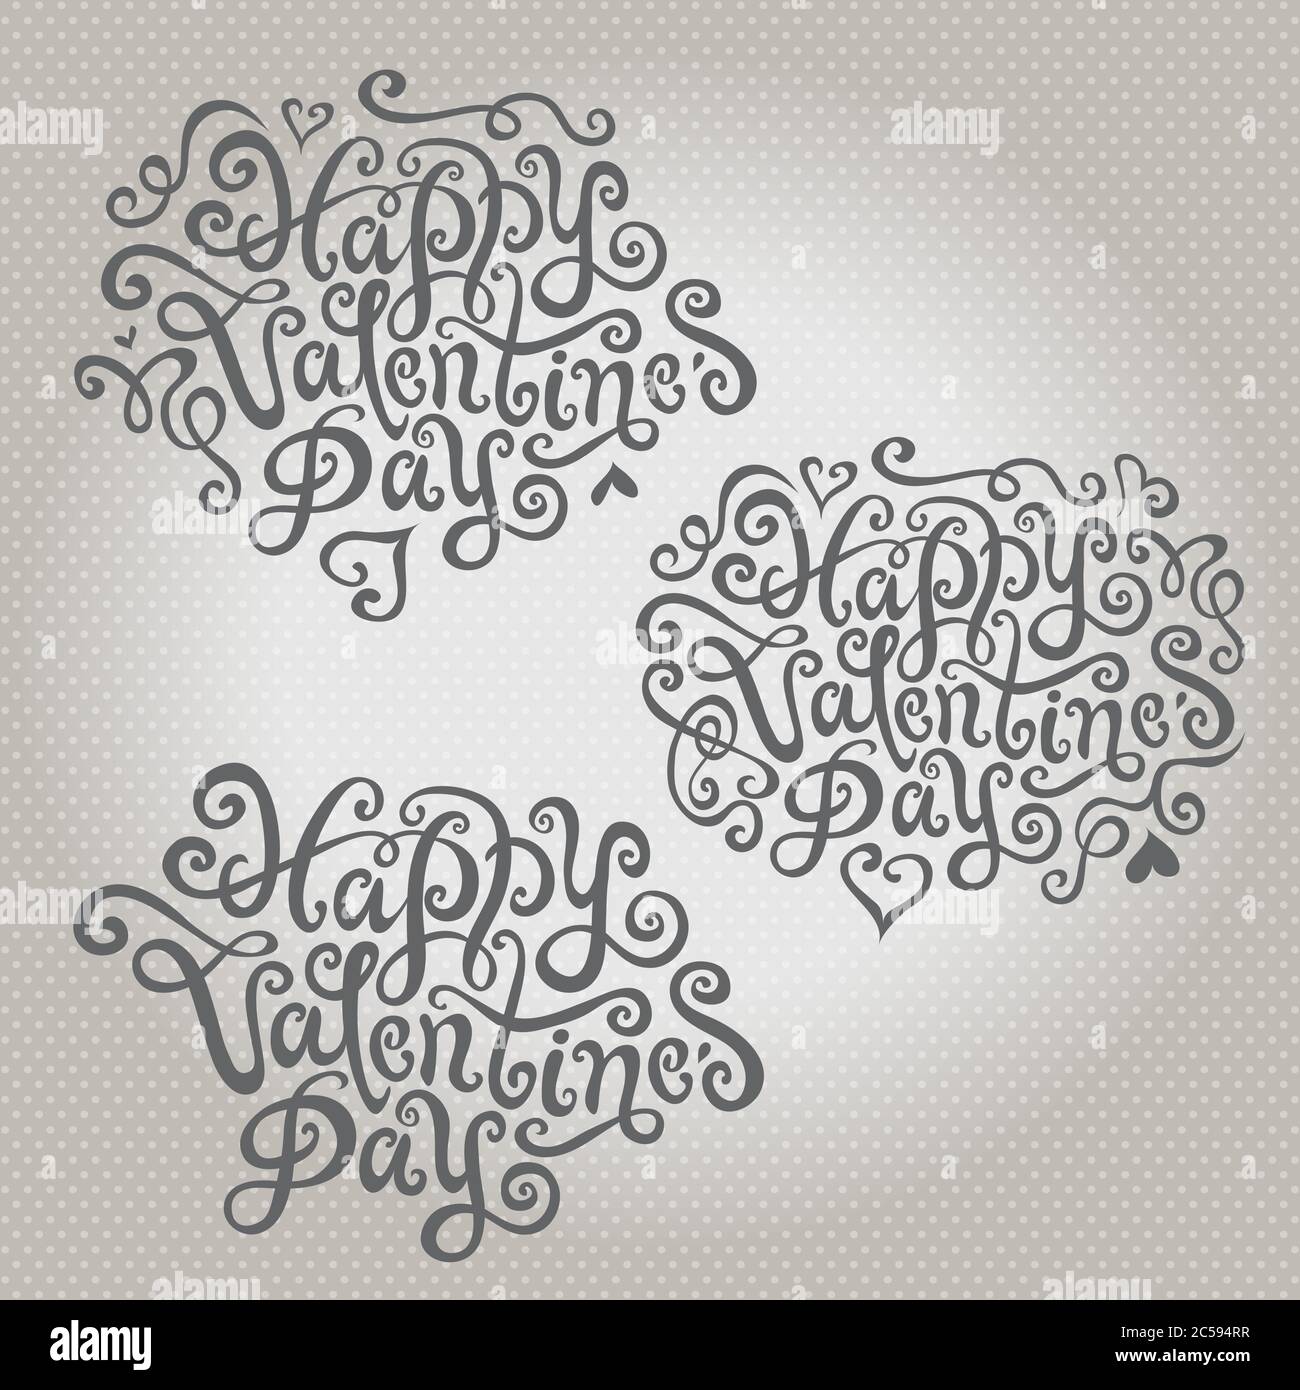 Happy valentines day handmade calligraphy Vector Image